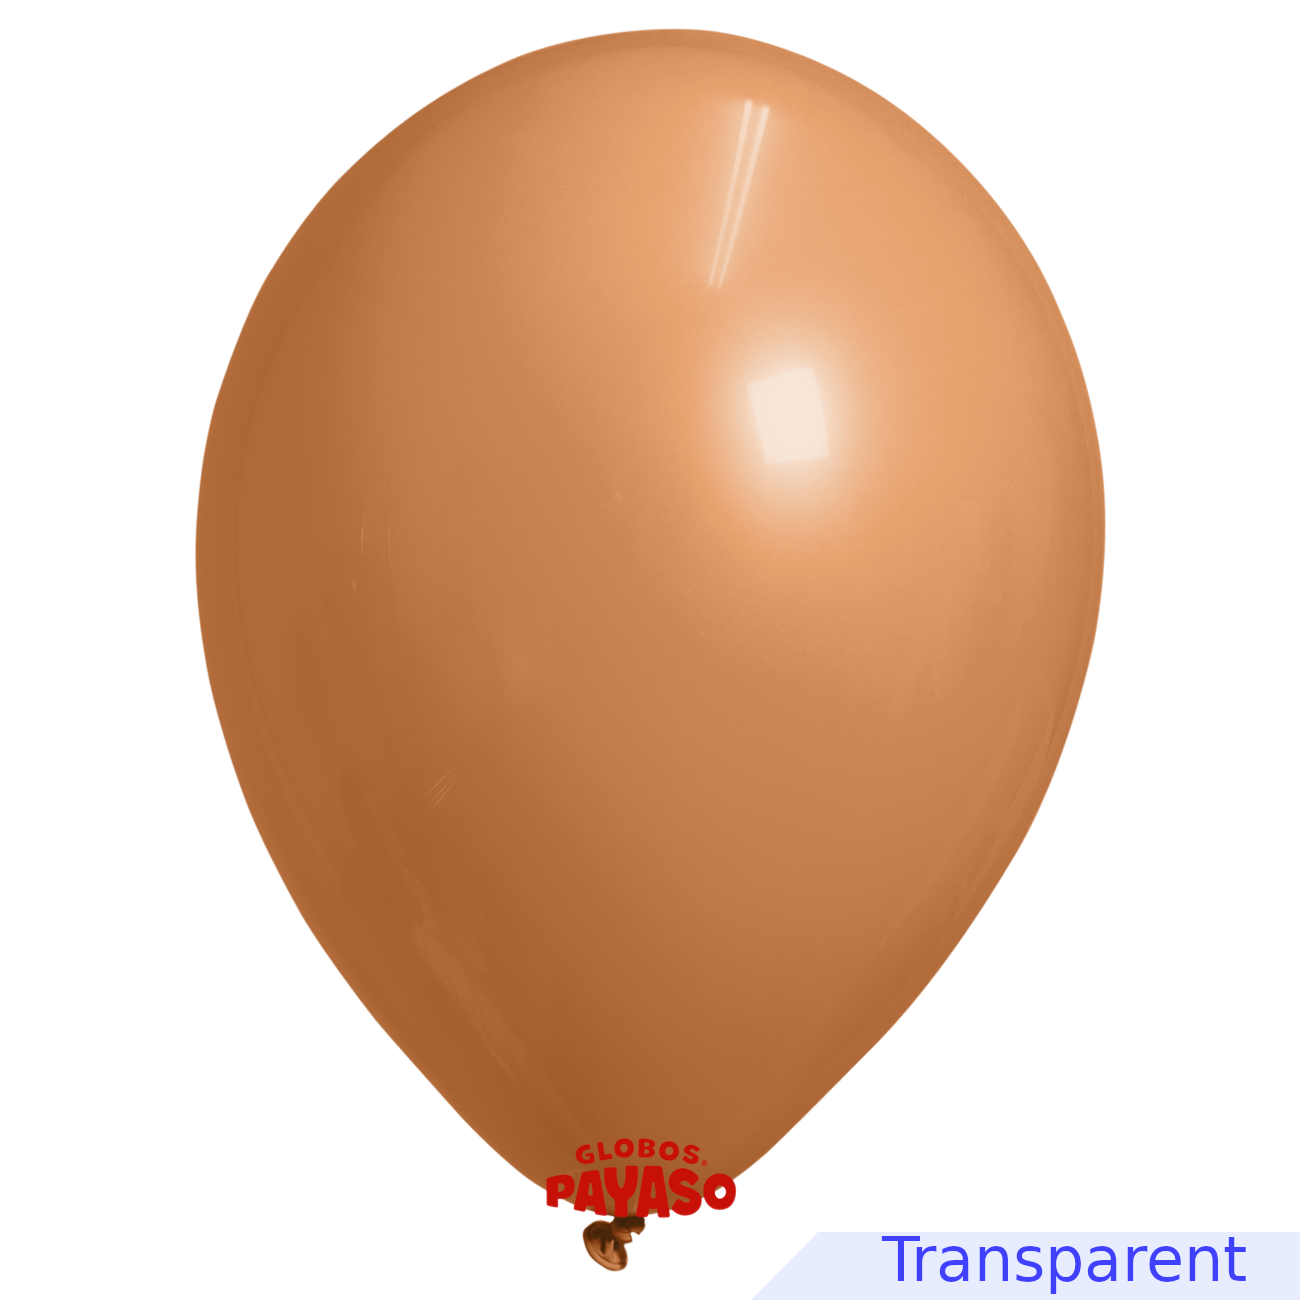 Globos Payaso / Unique 36" Orange Translucid Decorator Balloon